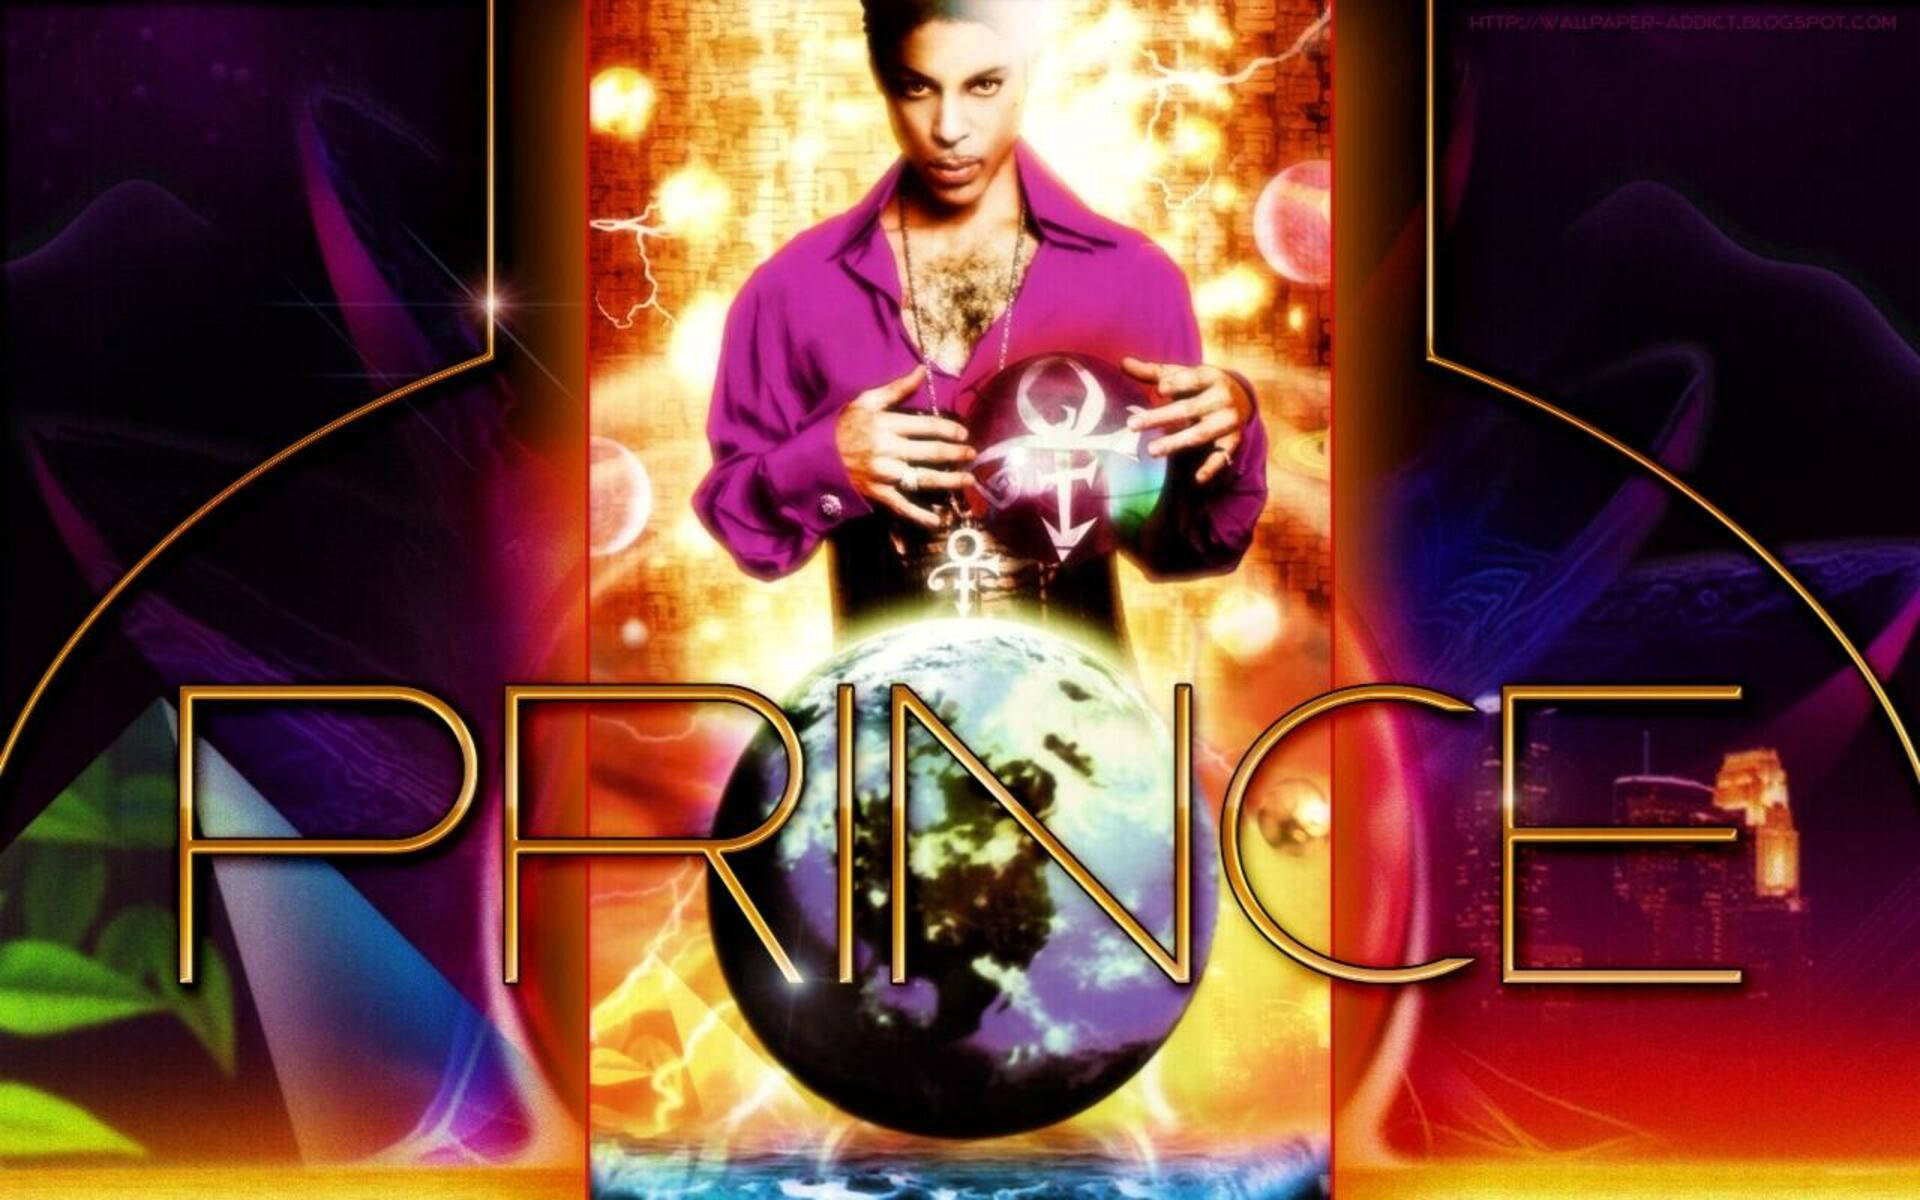 Prince Colorful Digital Art Background